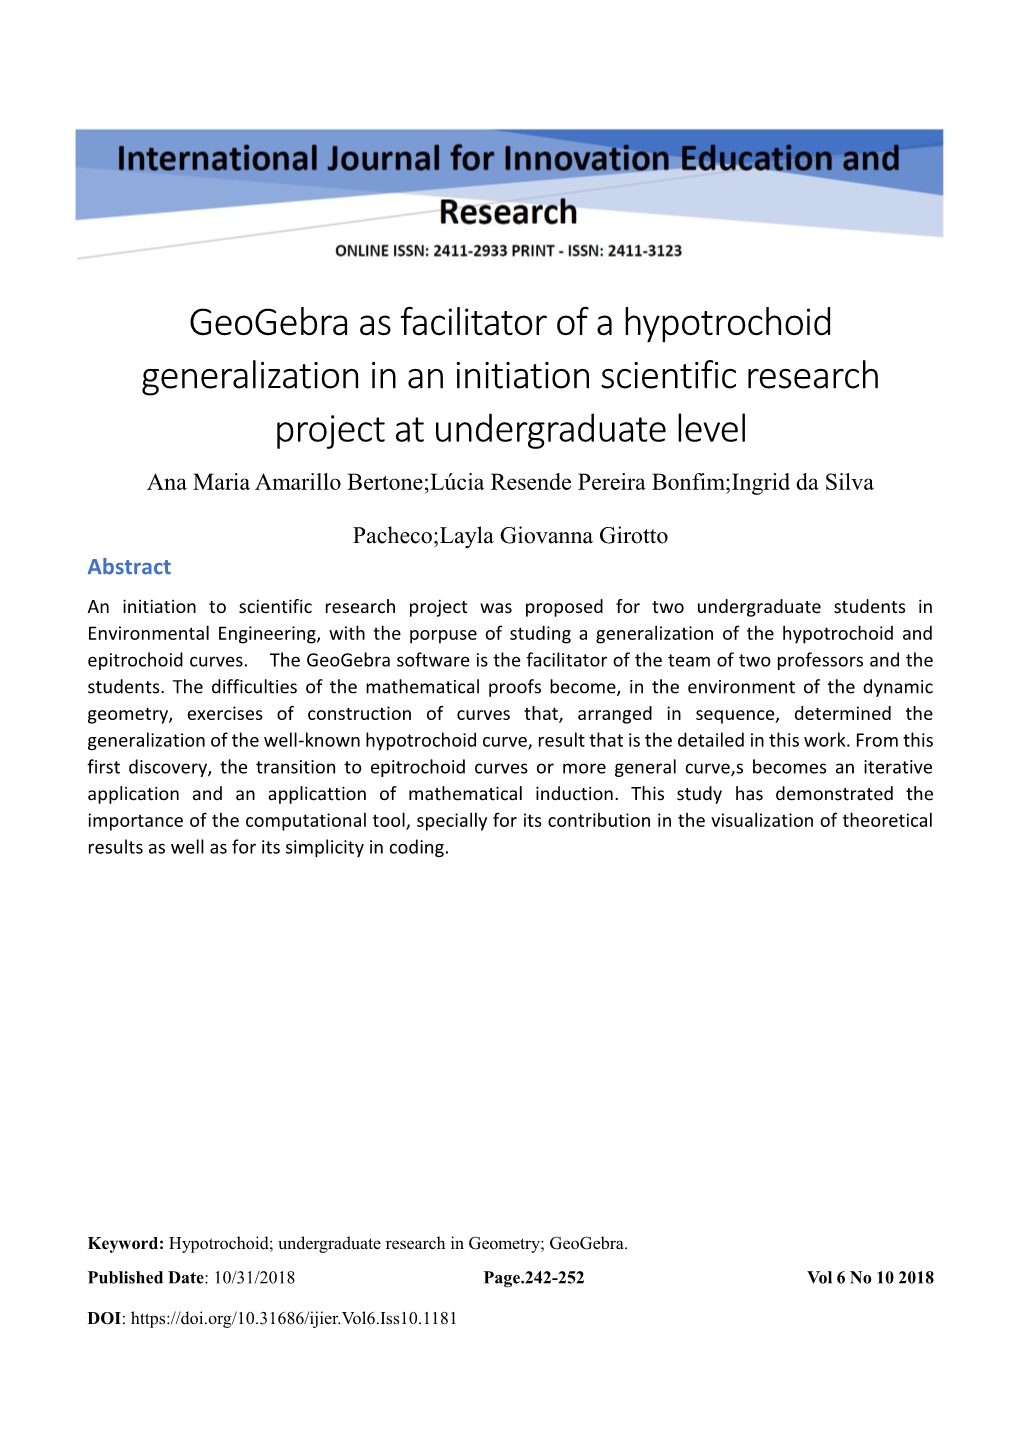 Geogebra As Facilitator of a Hypotrochoid Generalization in an Initiation Scientific Research